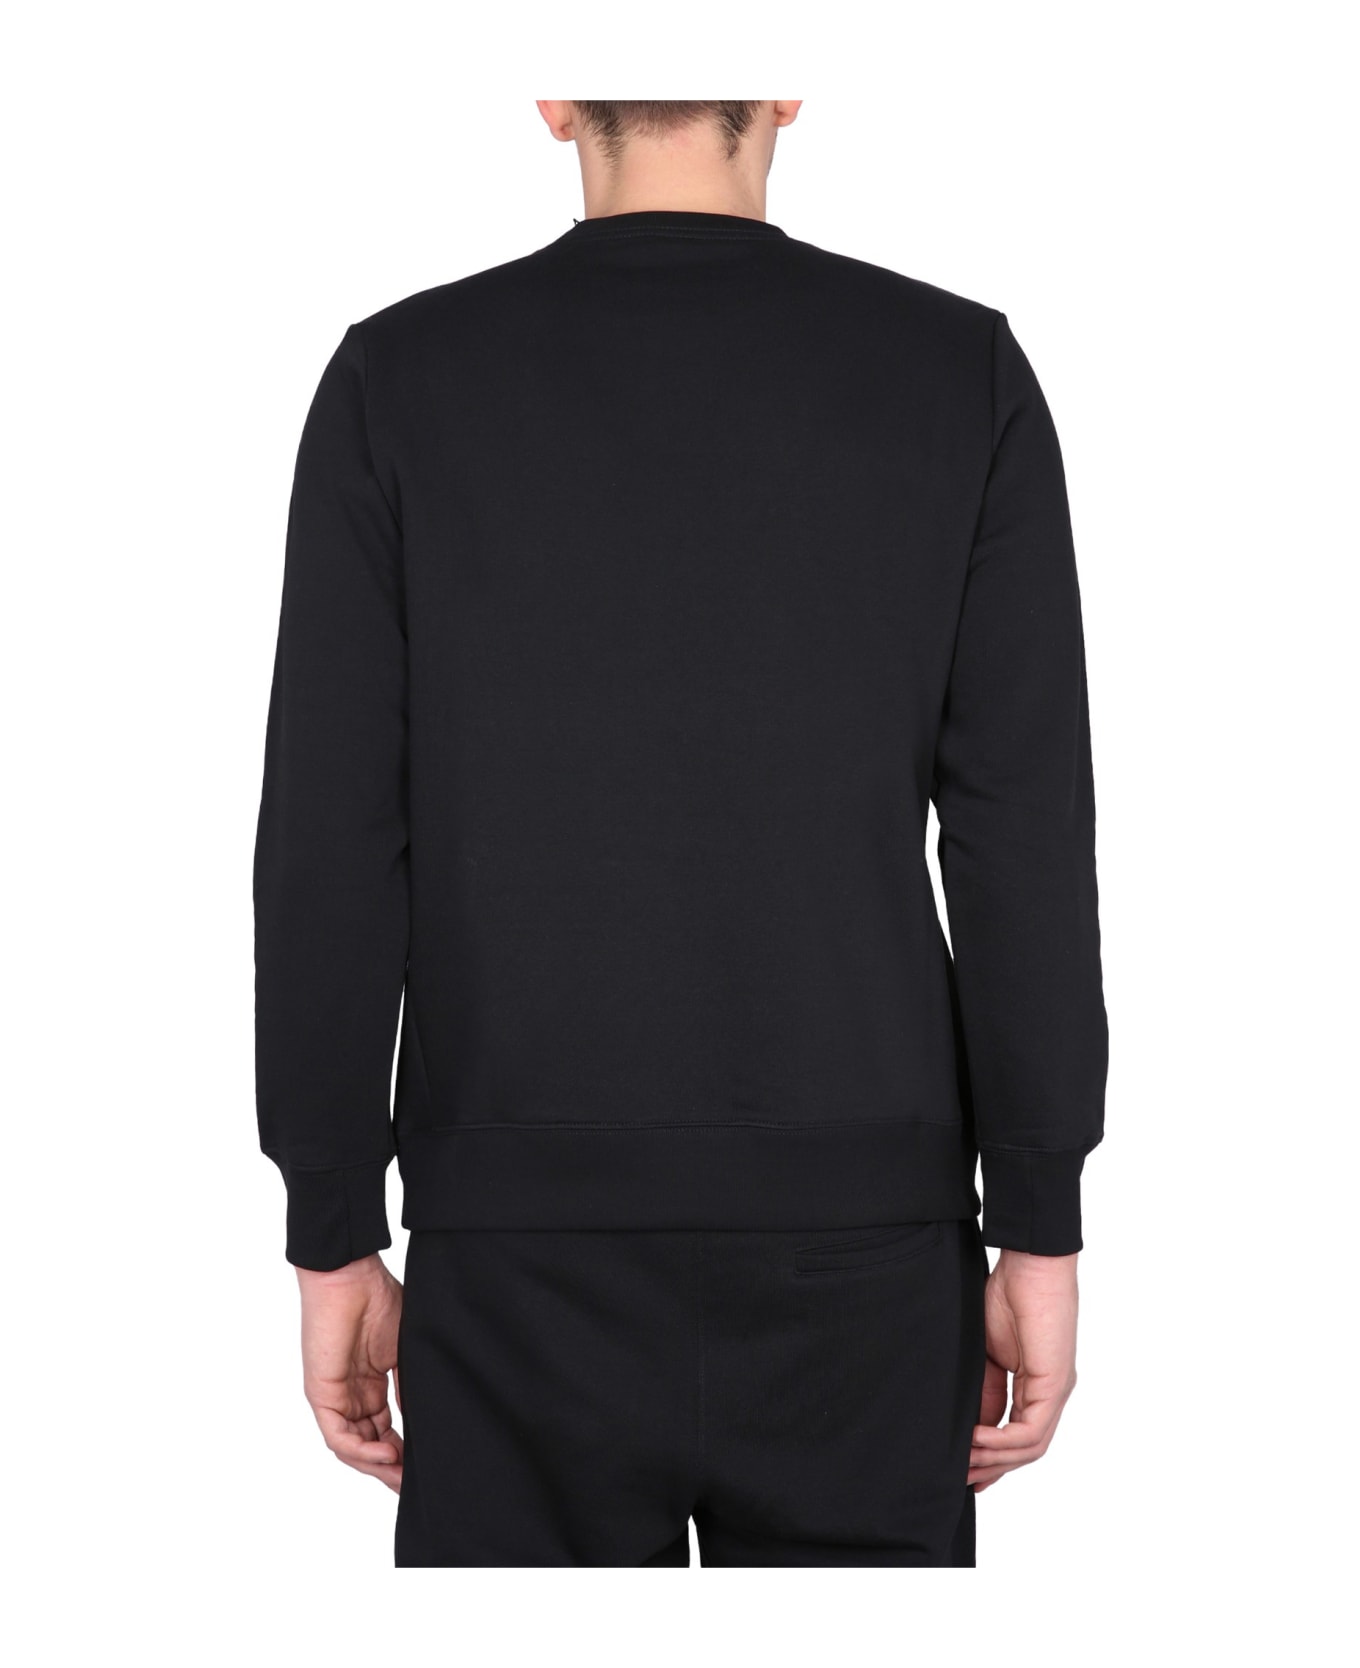 PS by Paul Smith Sweatshirt With Zebra Embroidery - Black